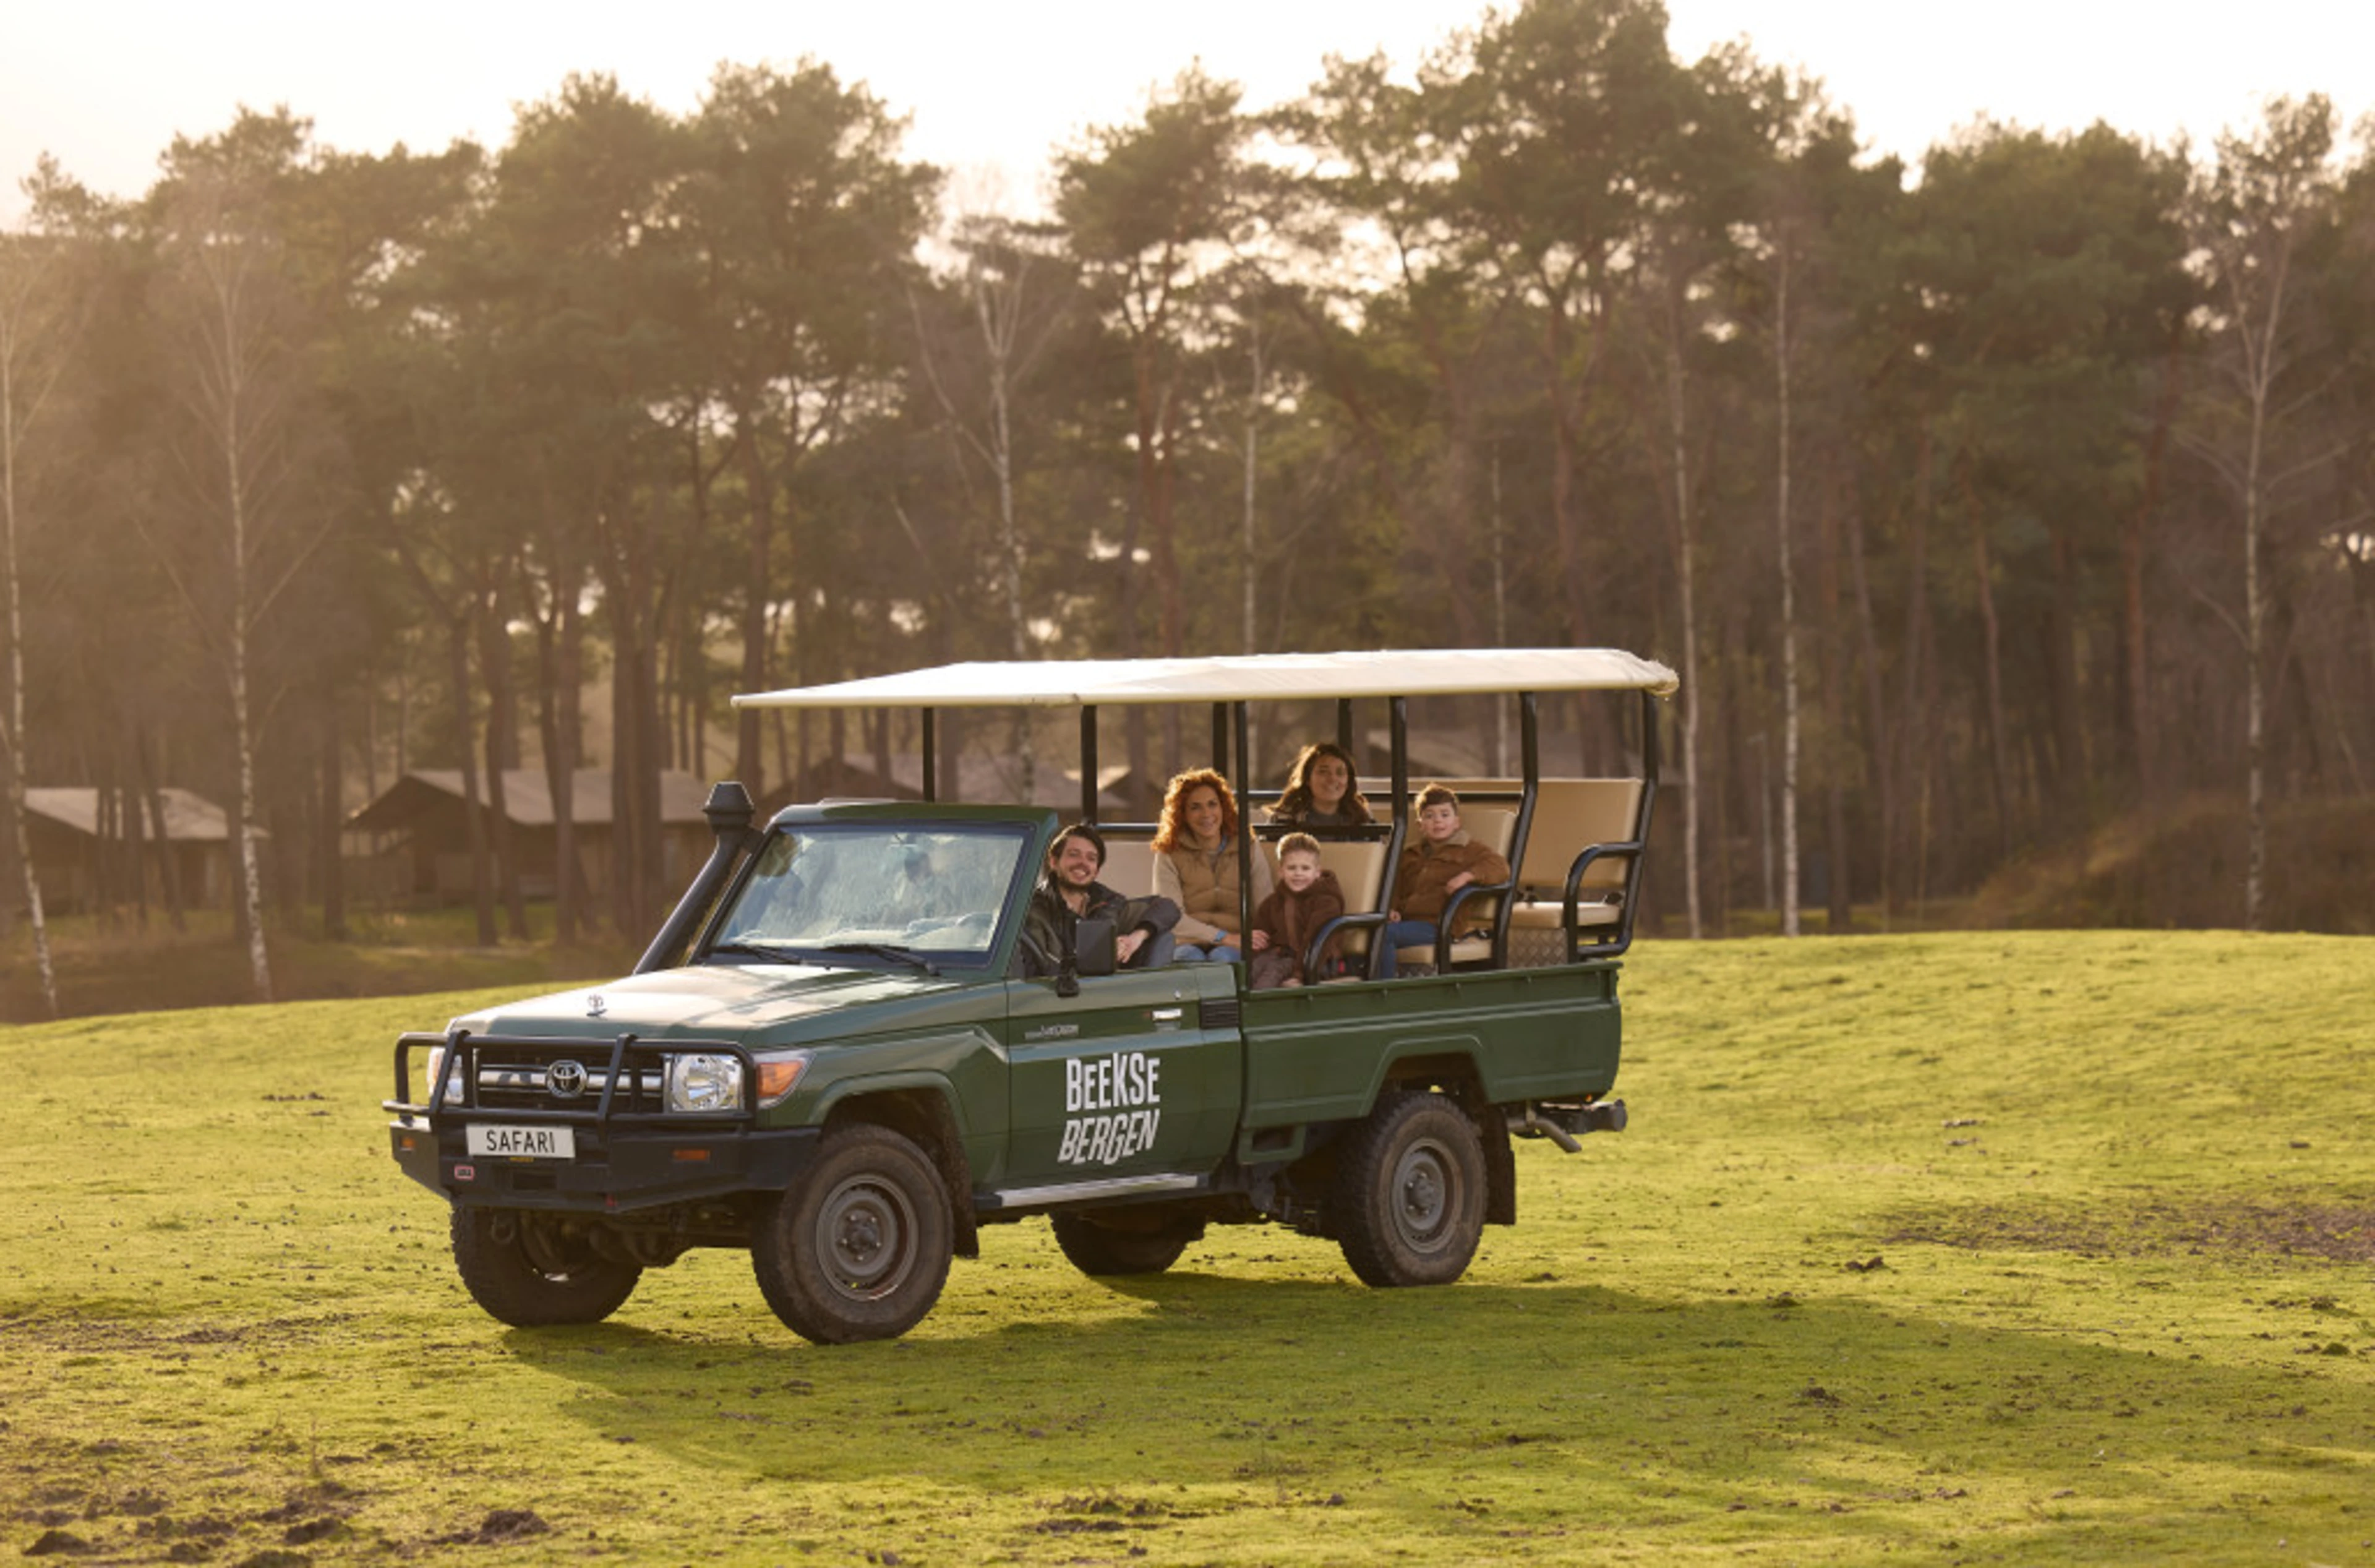 Beekse bergen game drive safaritent jeep ranger gezin